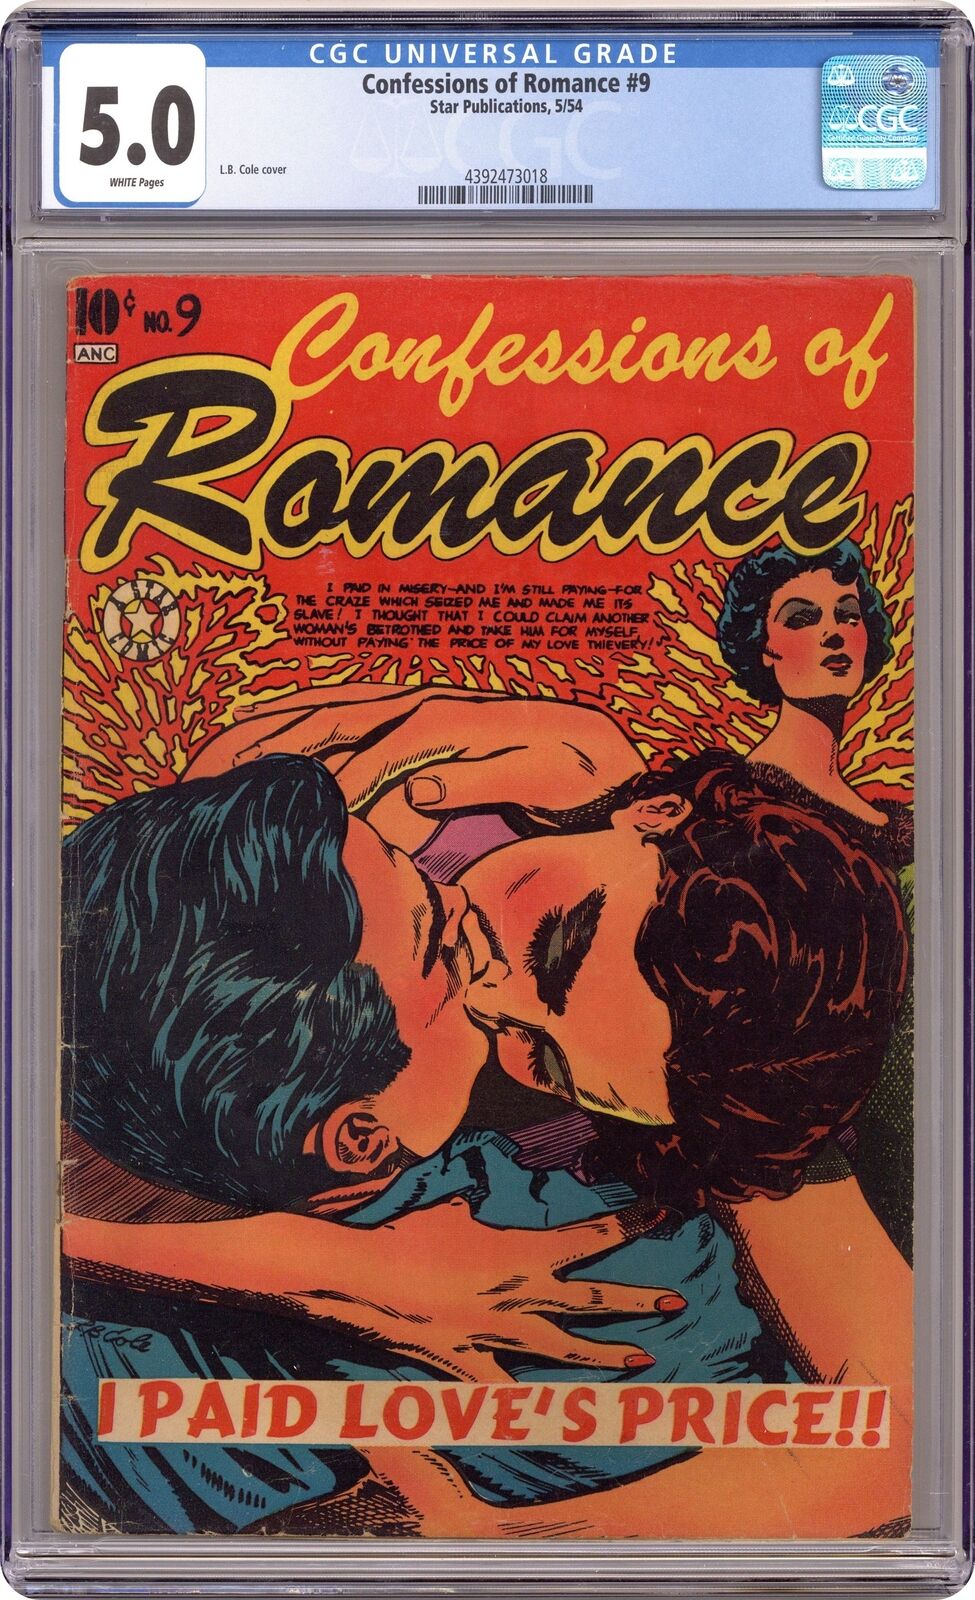 Confessions of Romance #9 CGC 5.0 1954 4392473018